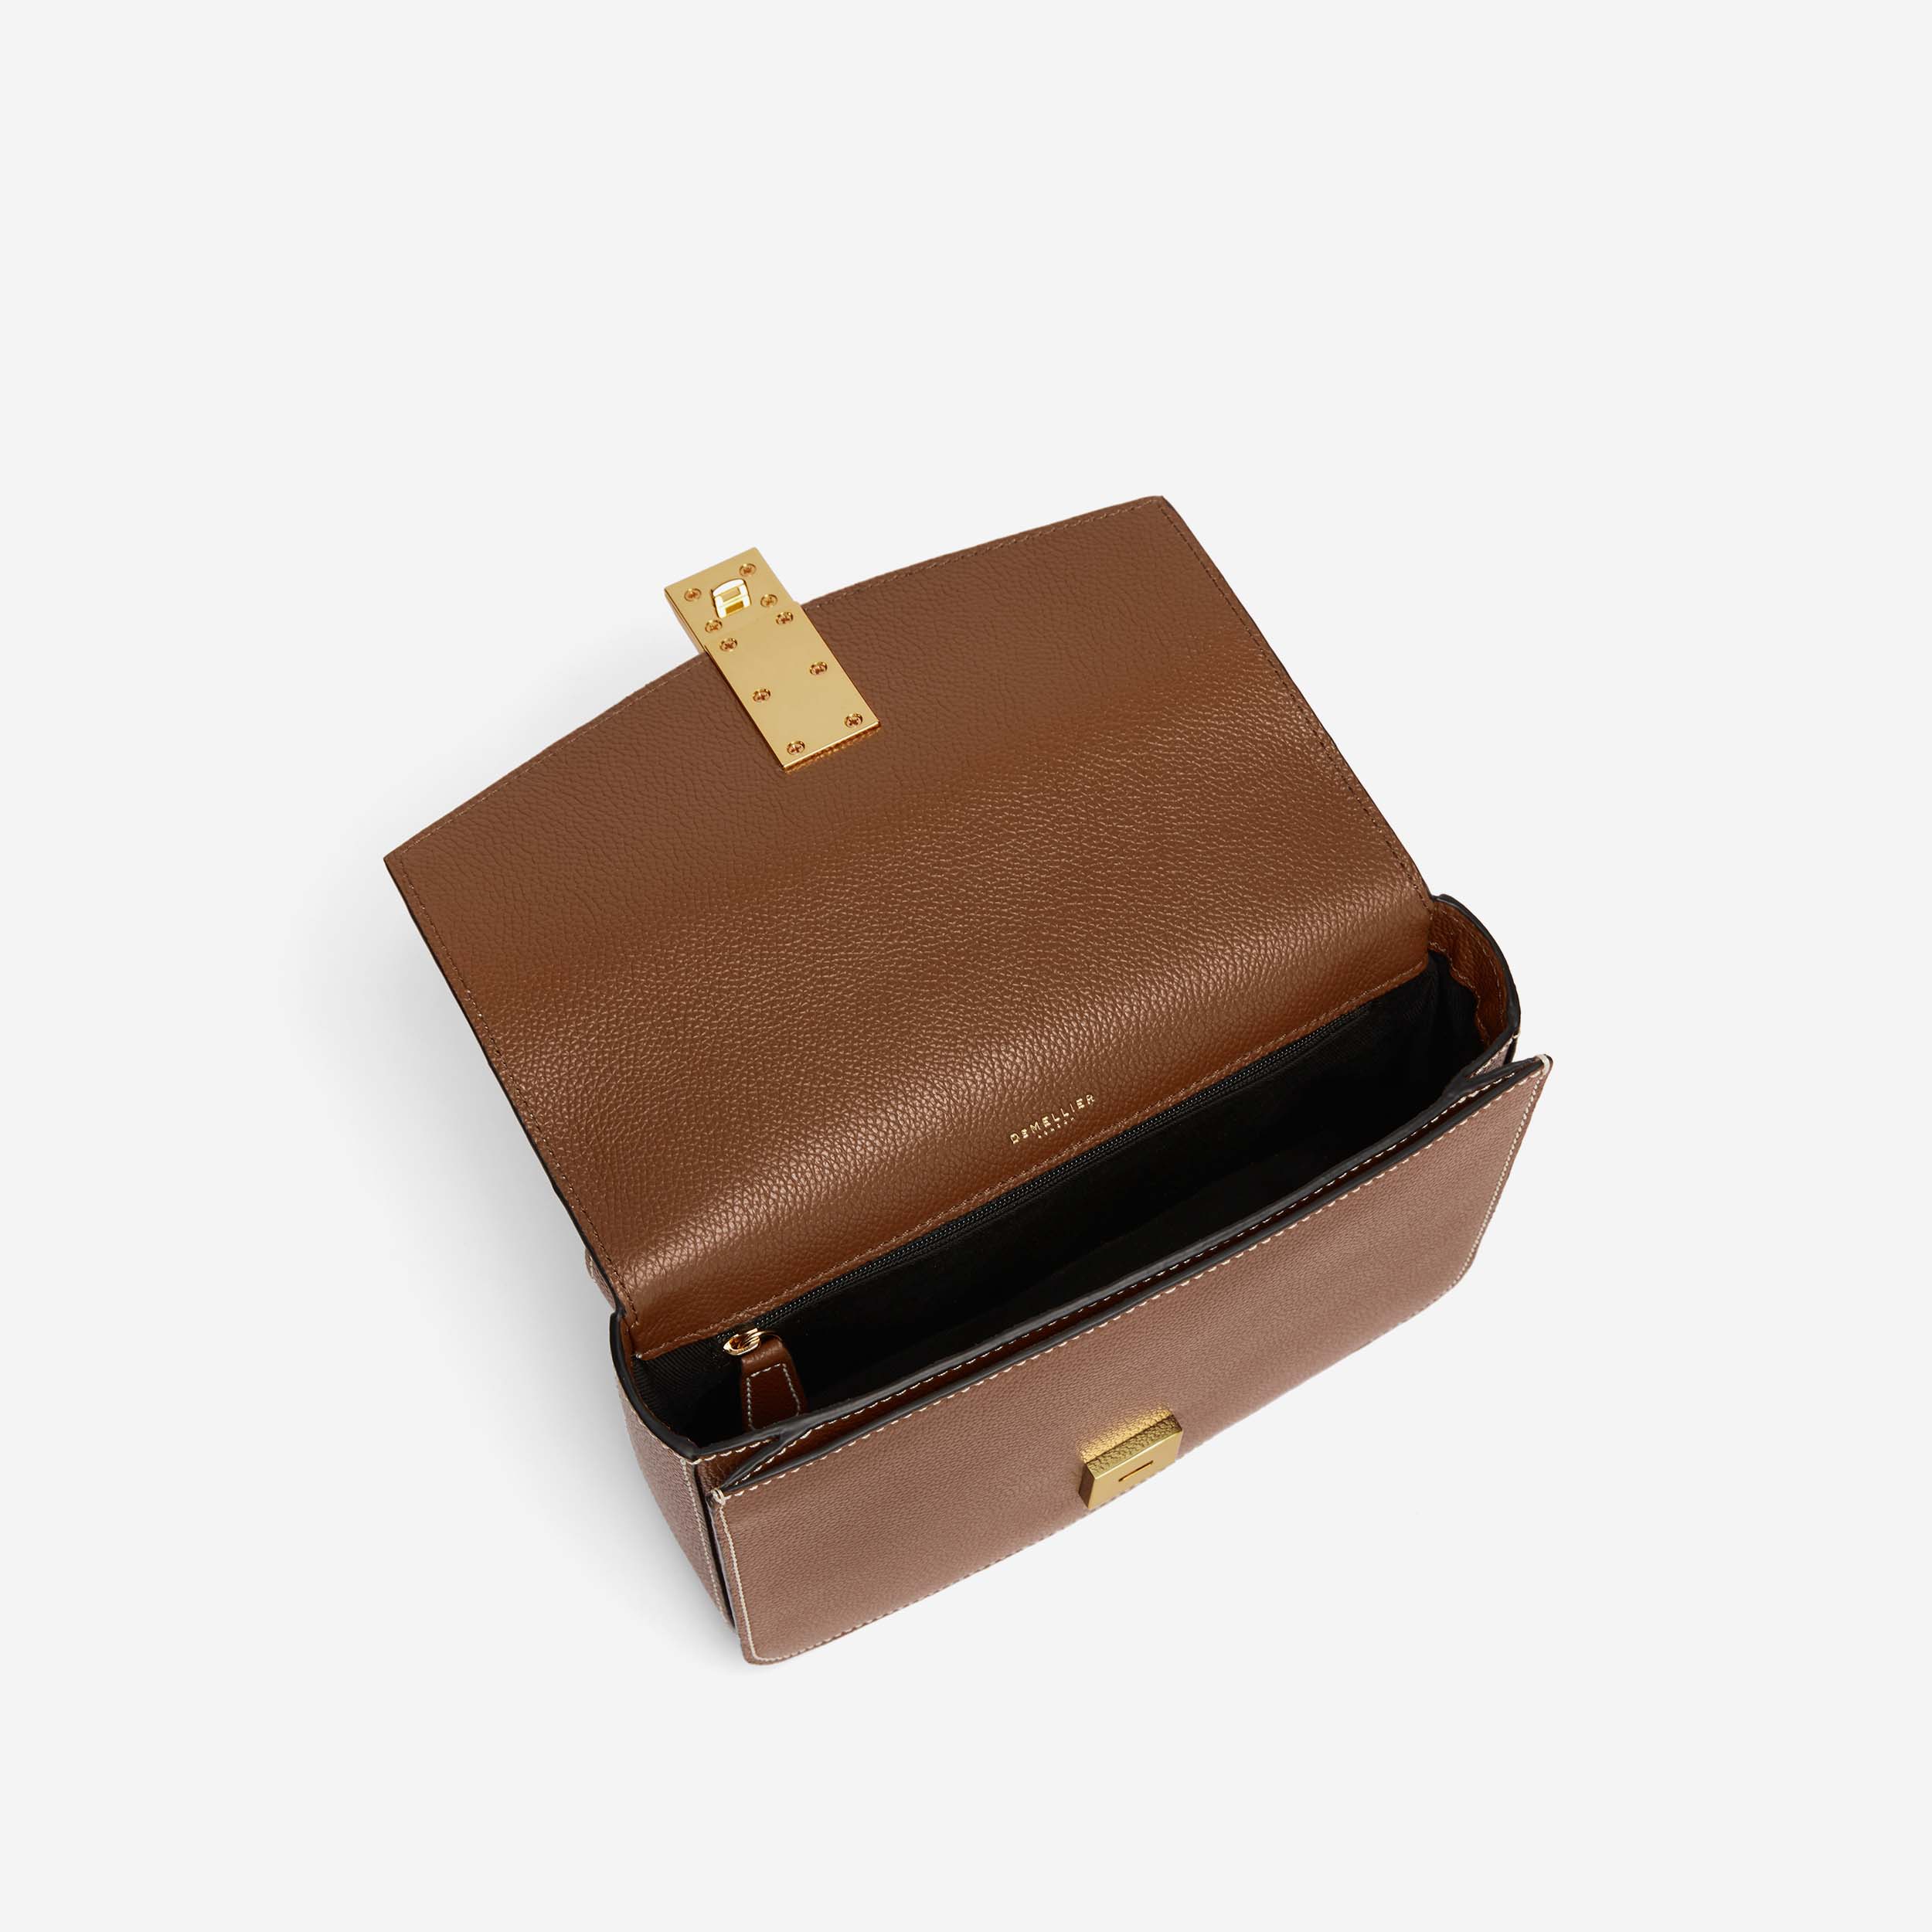 Billy Bag London Small TAN Handbag Purse | eBay